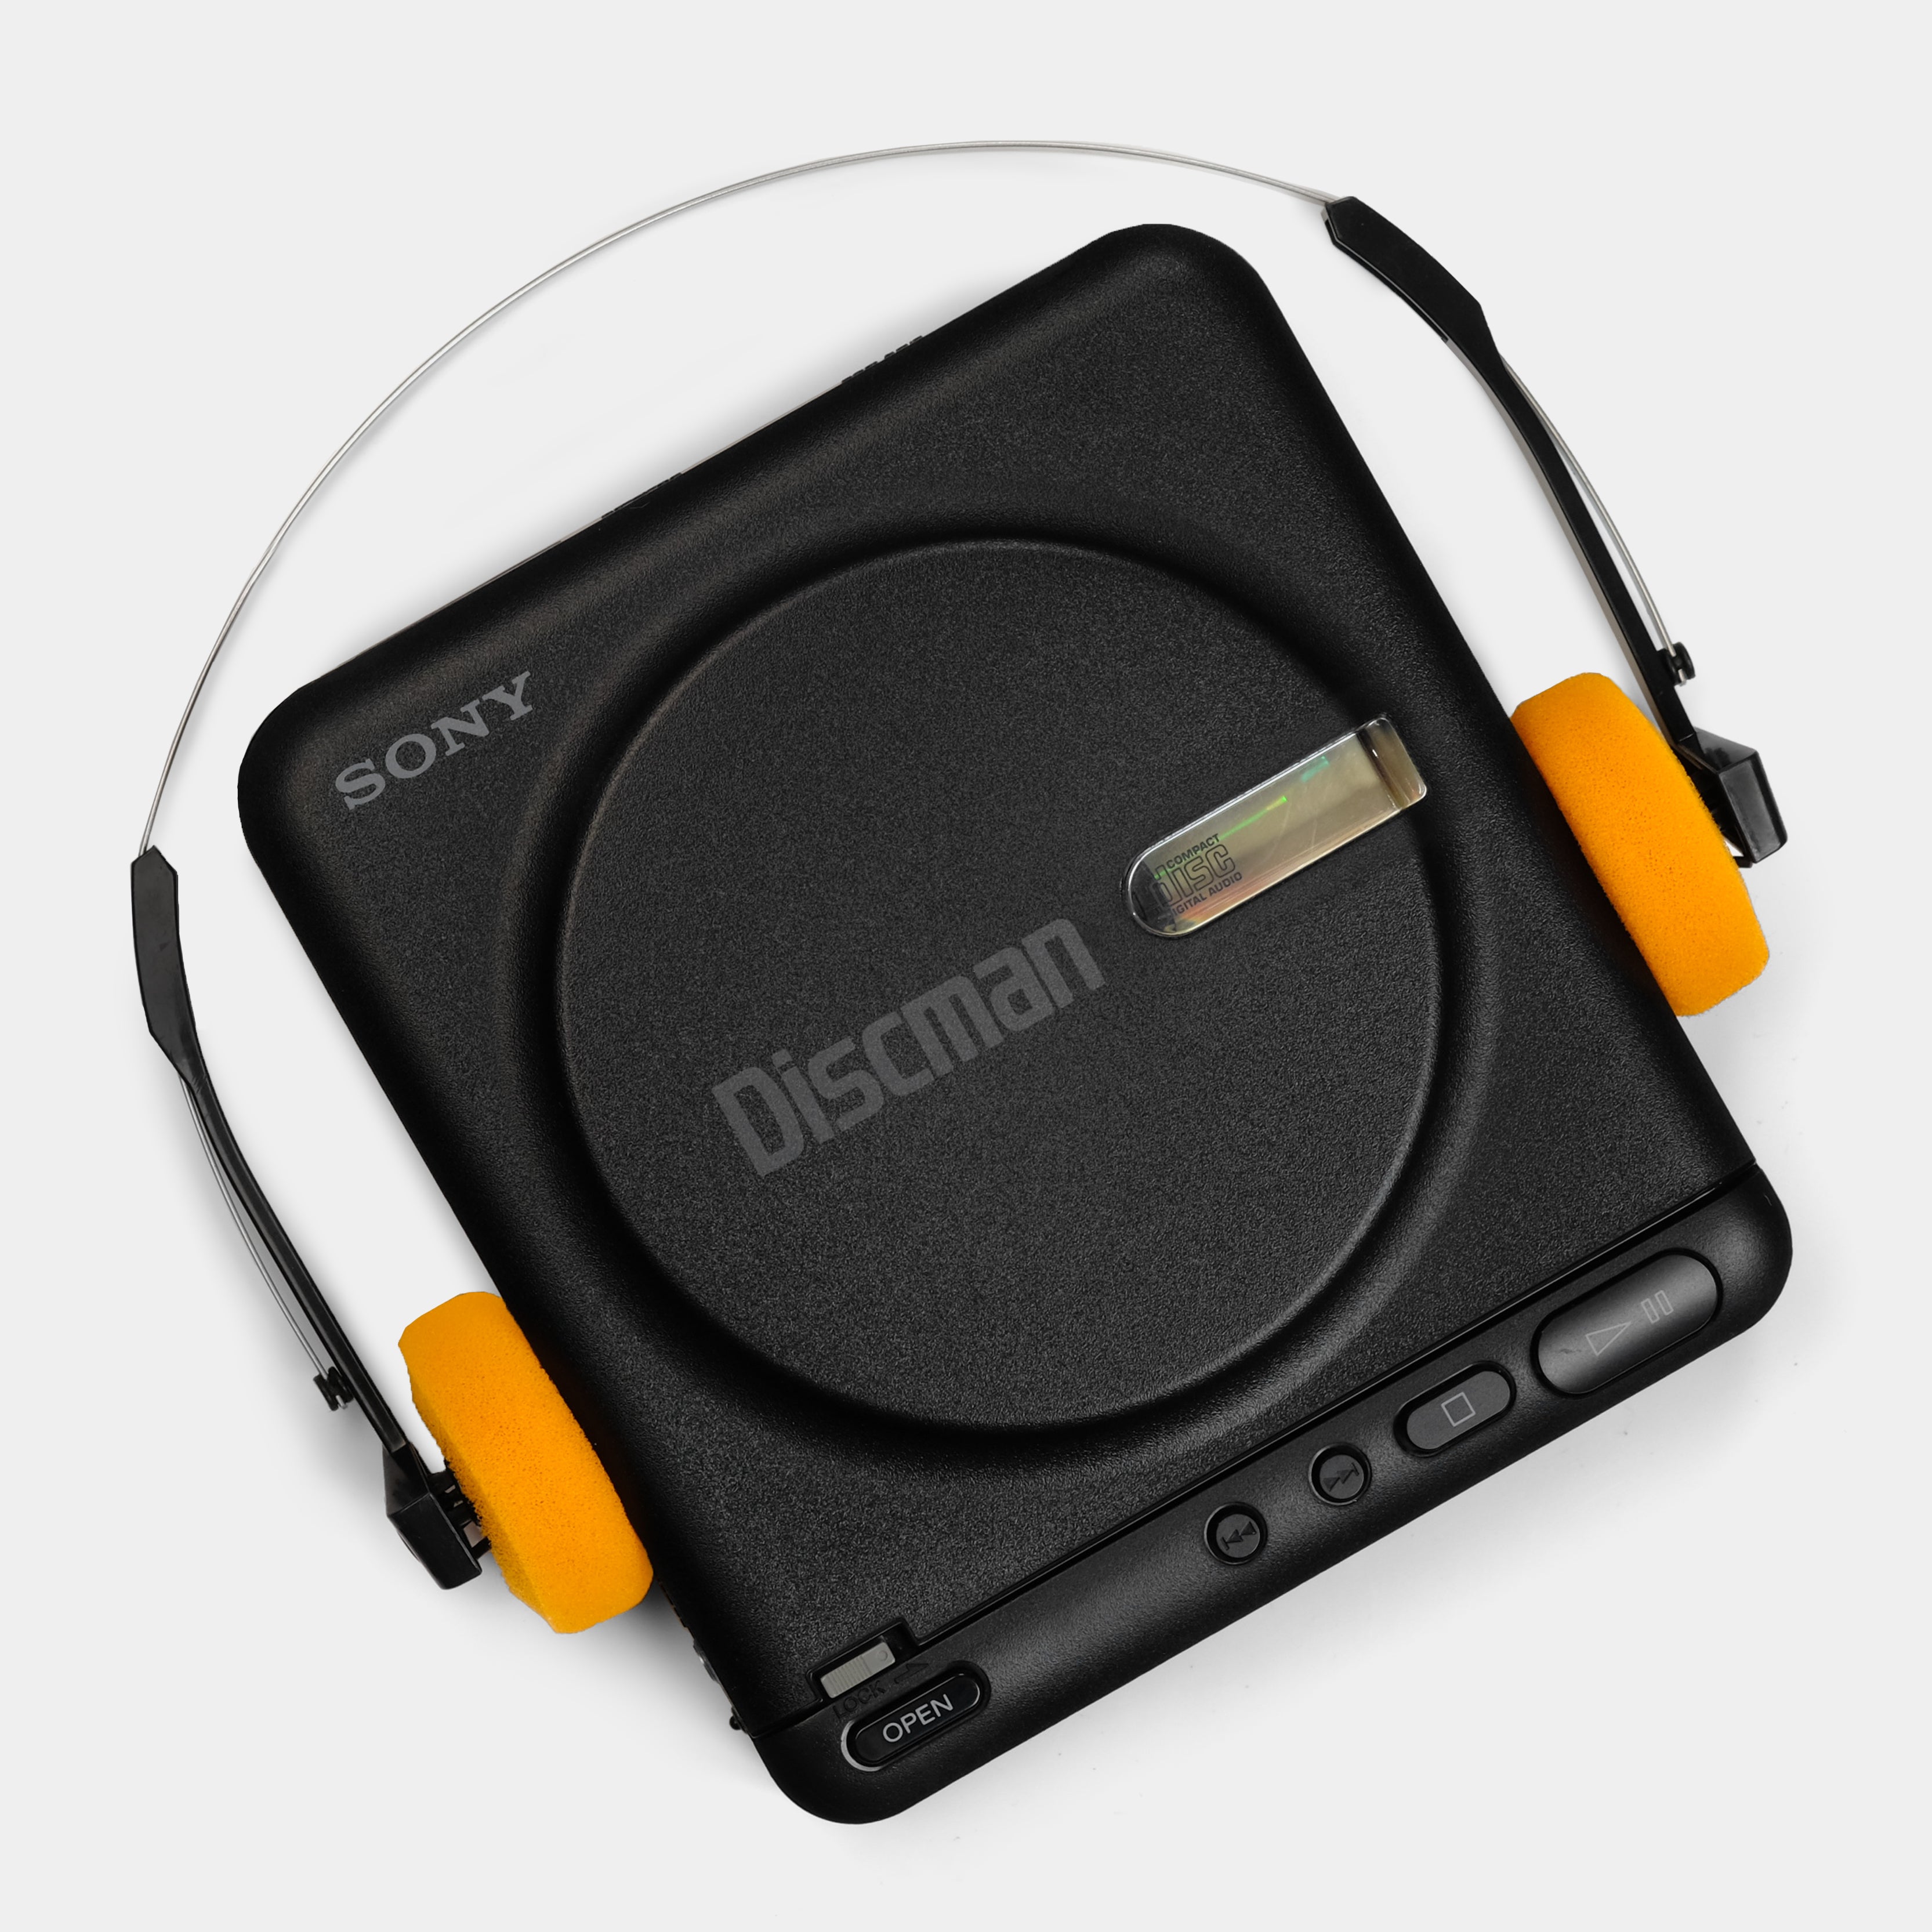 Sony Discman D-2 Portable CD Player